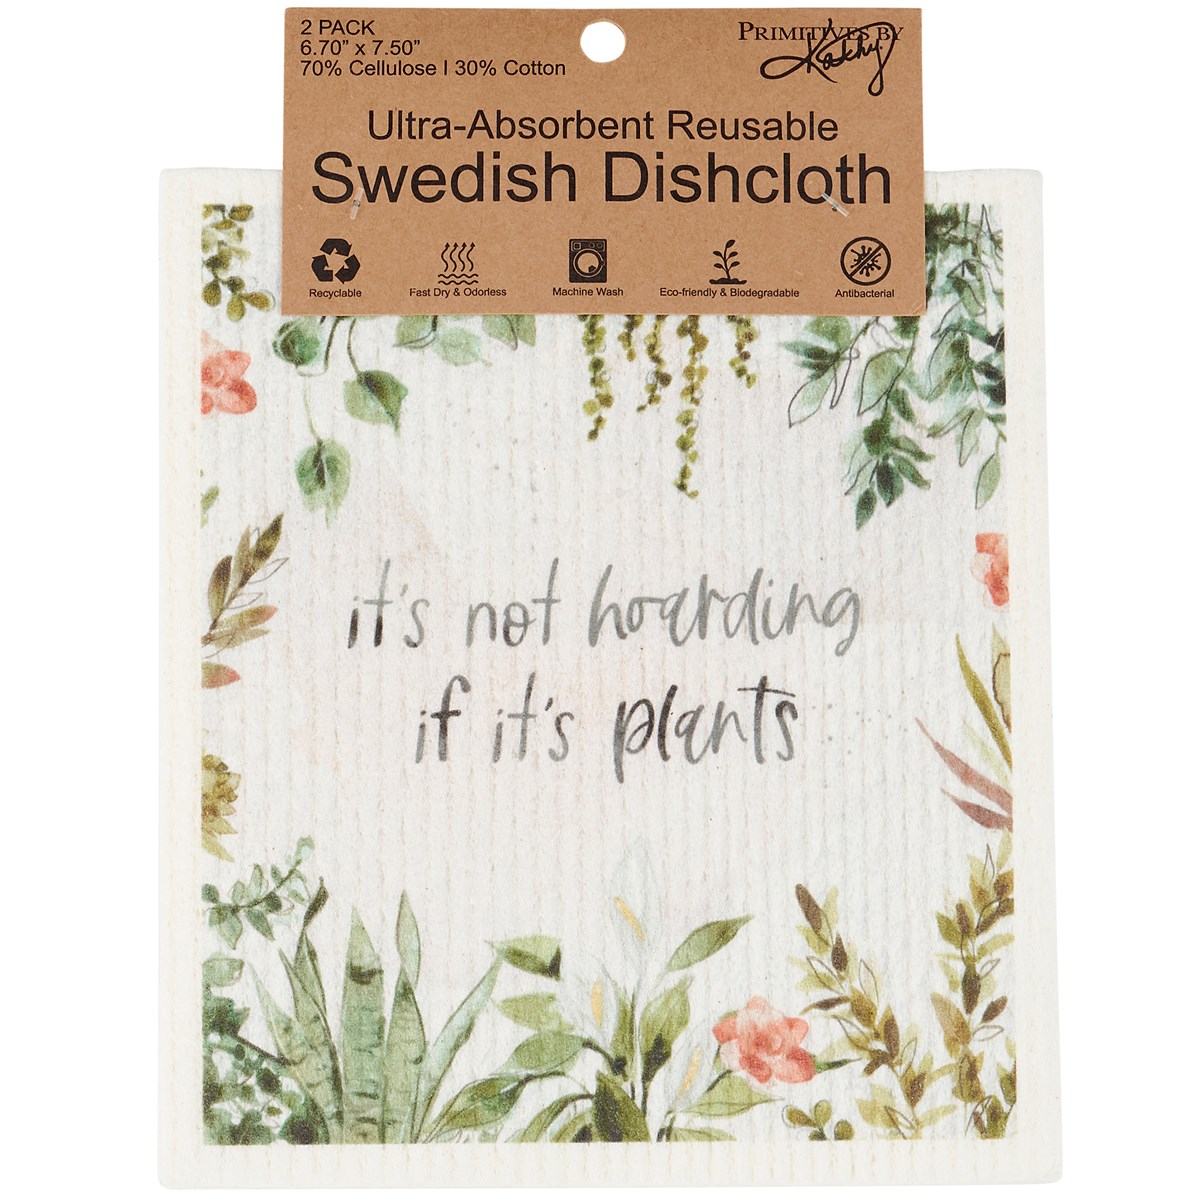 Not Hoarding Swedish Dishcloth Set - Cellulose, Cotton